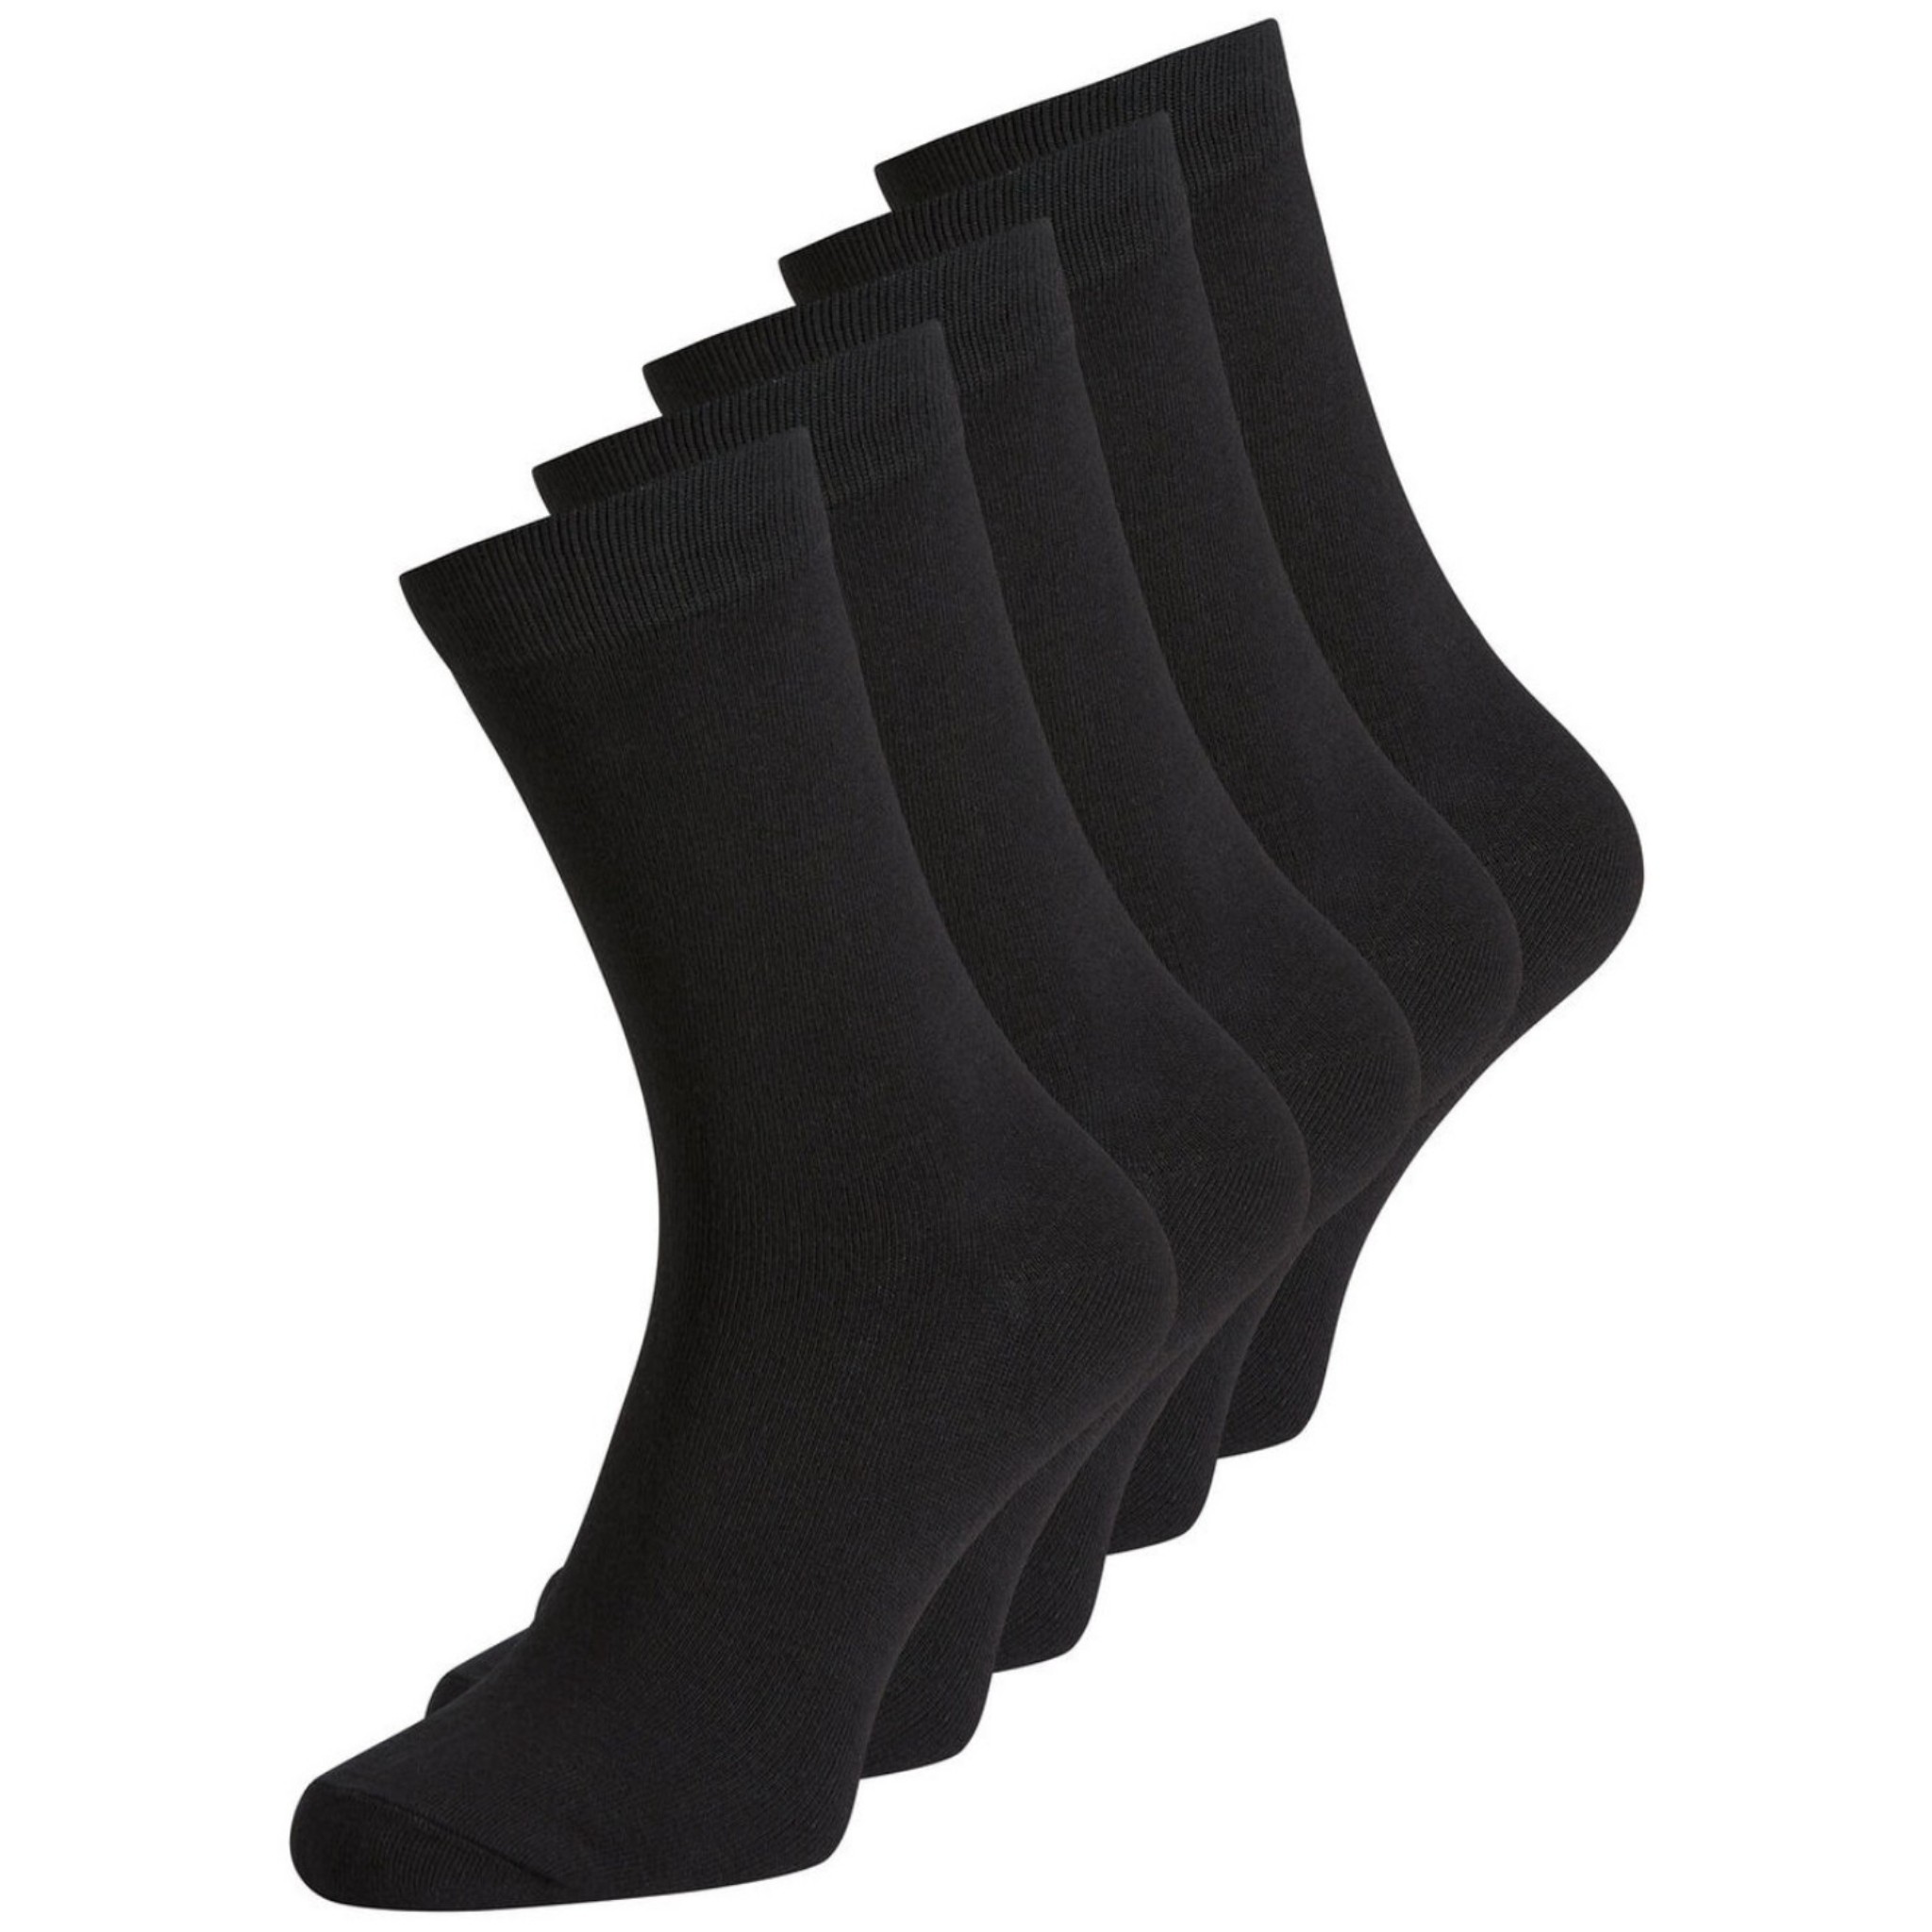 Pack 5 Calcetines negros - Trade Moda Barcelona